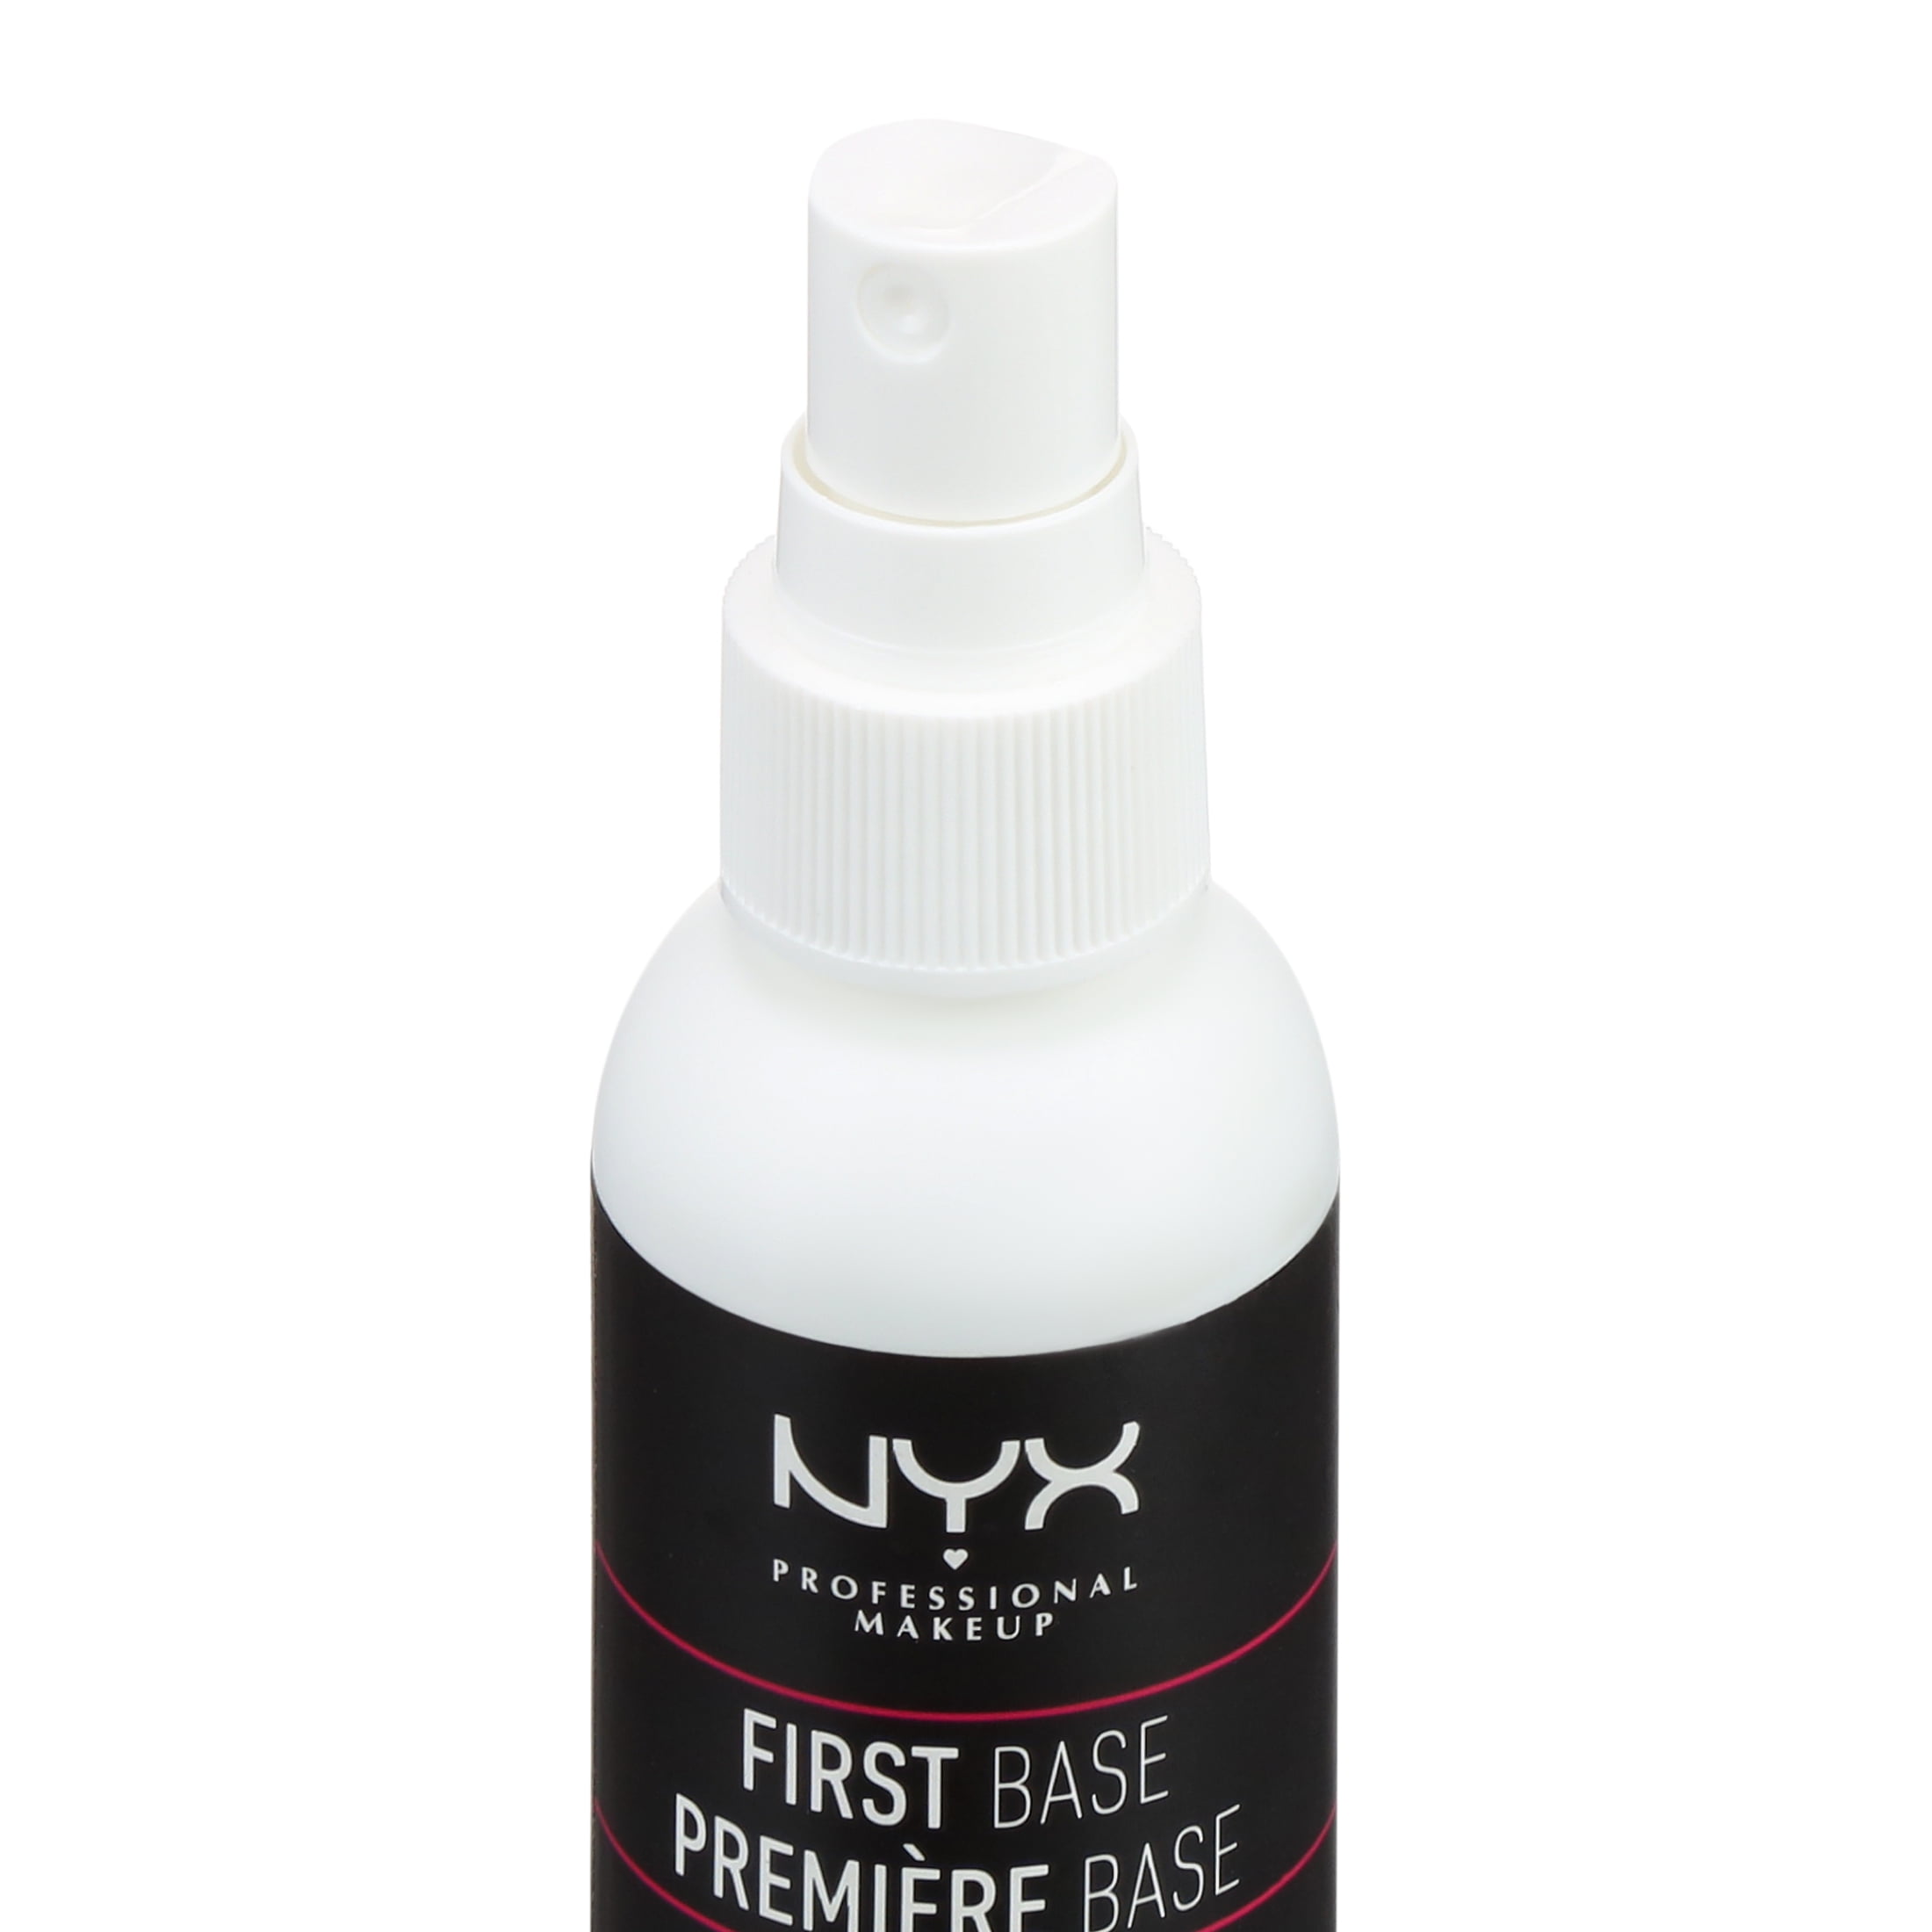 Spray, Makeup First Professional oz 2.02 Base fl NYX Primer